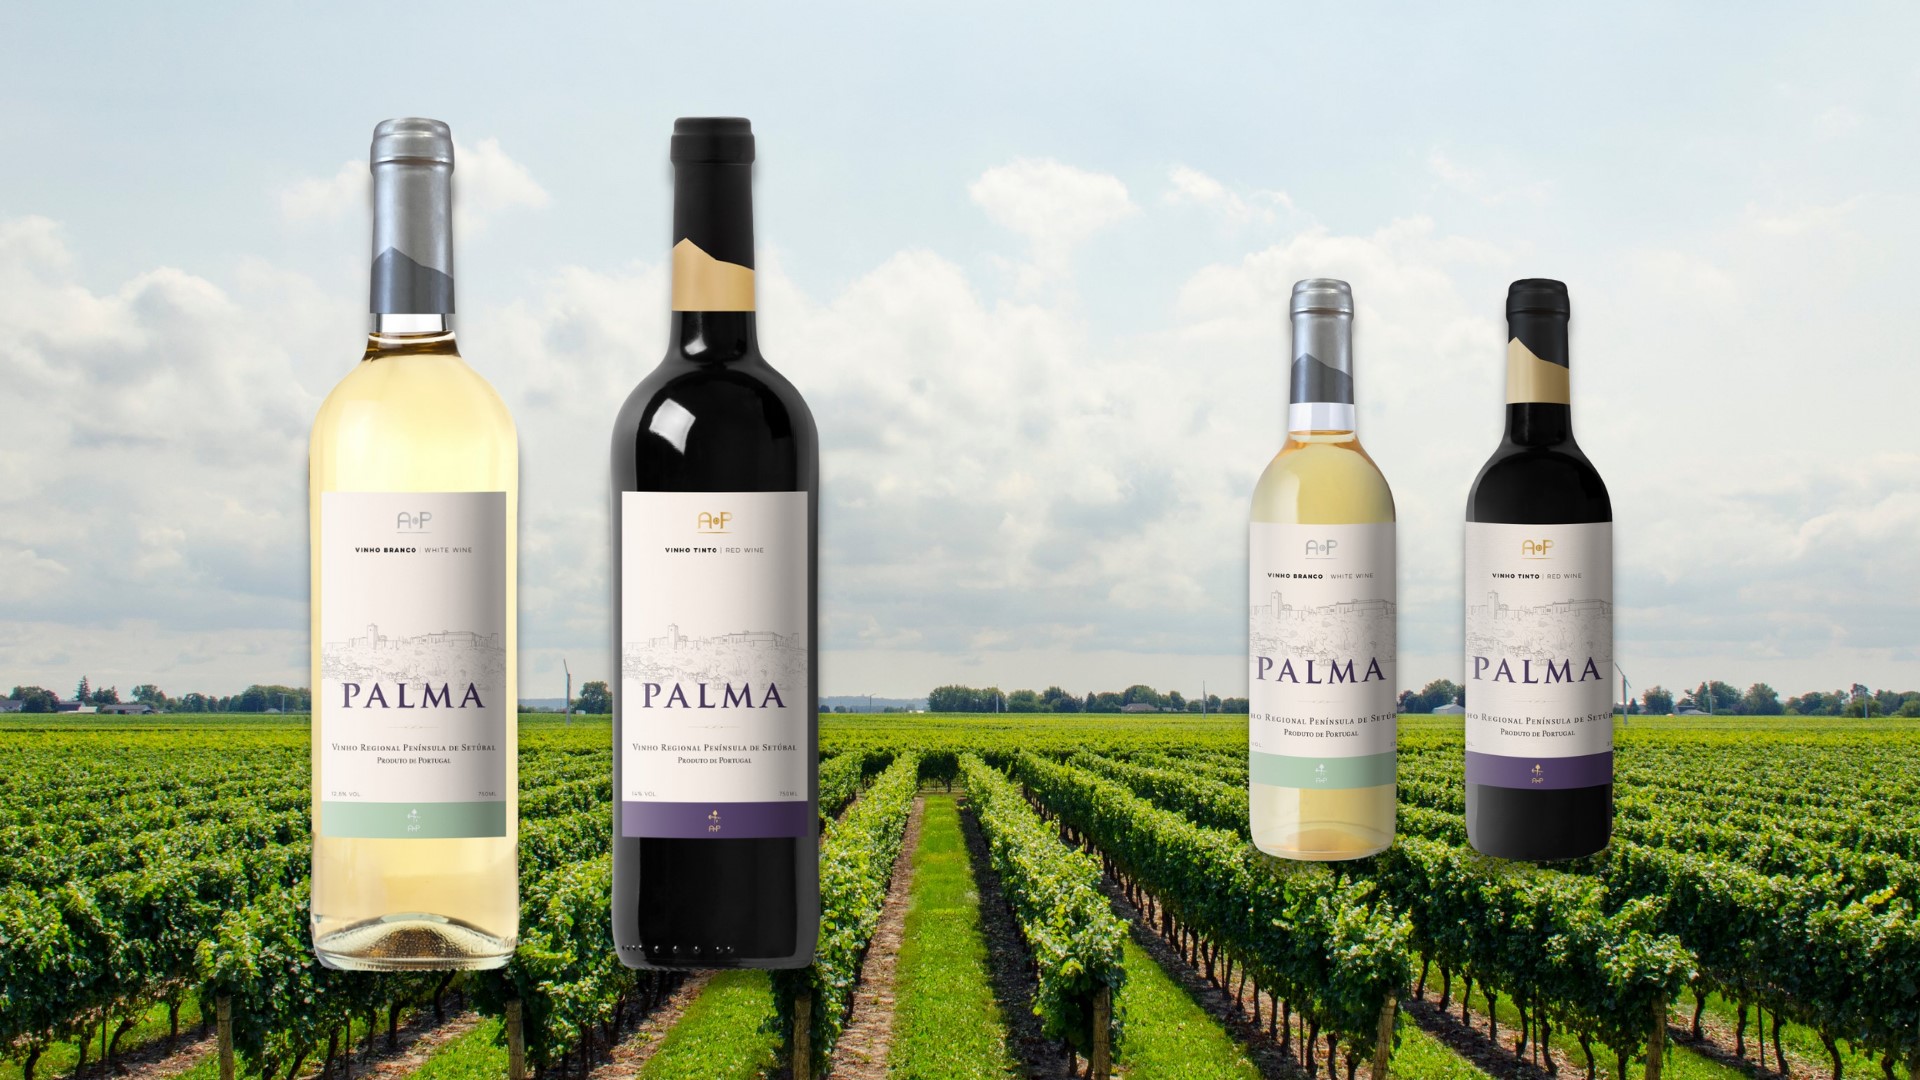  “PALMA”: THE NEW WINE BRAND FROM ADEGA DE PALMELA